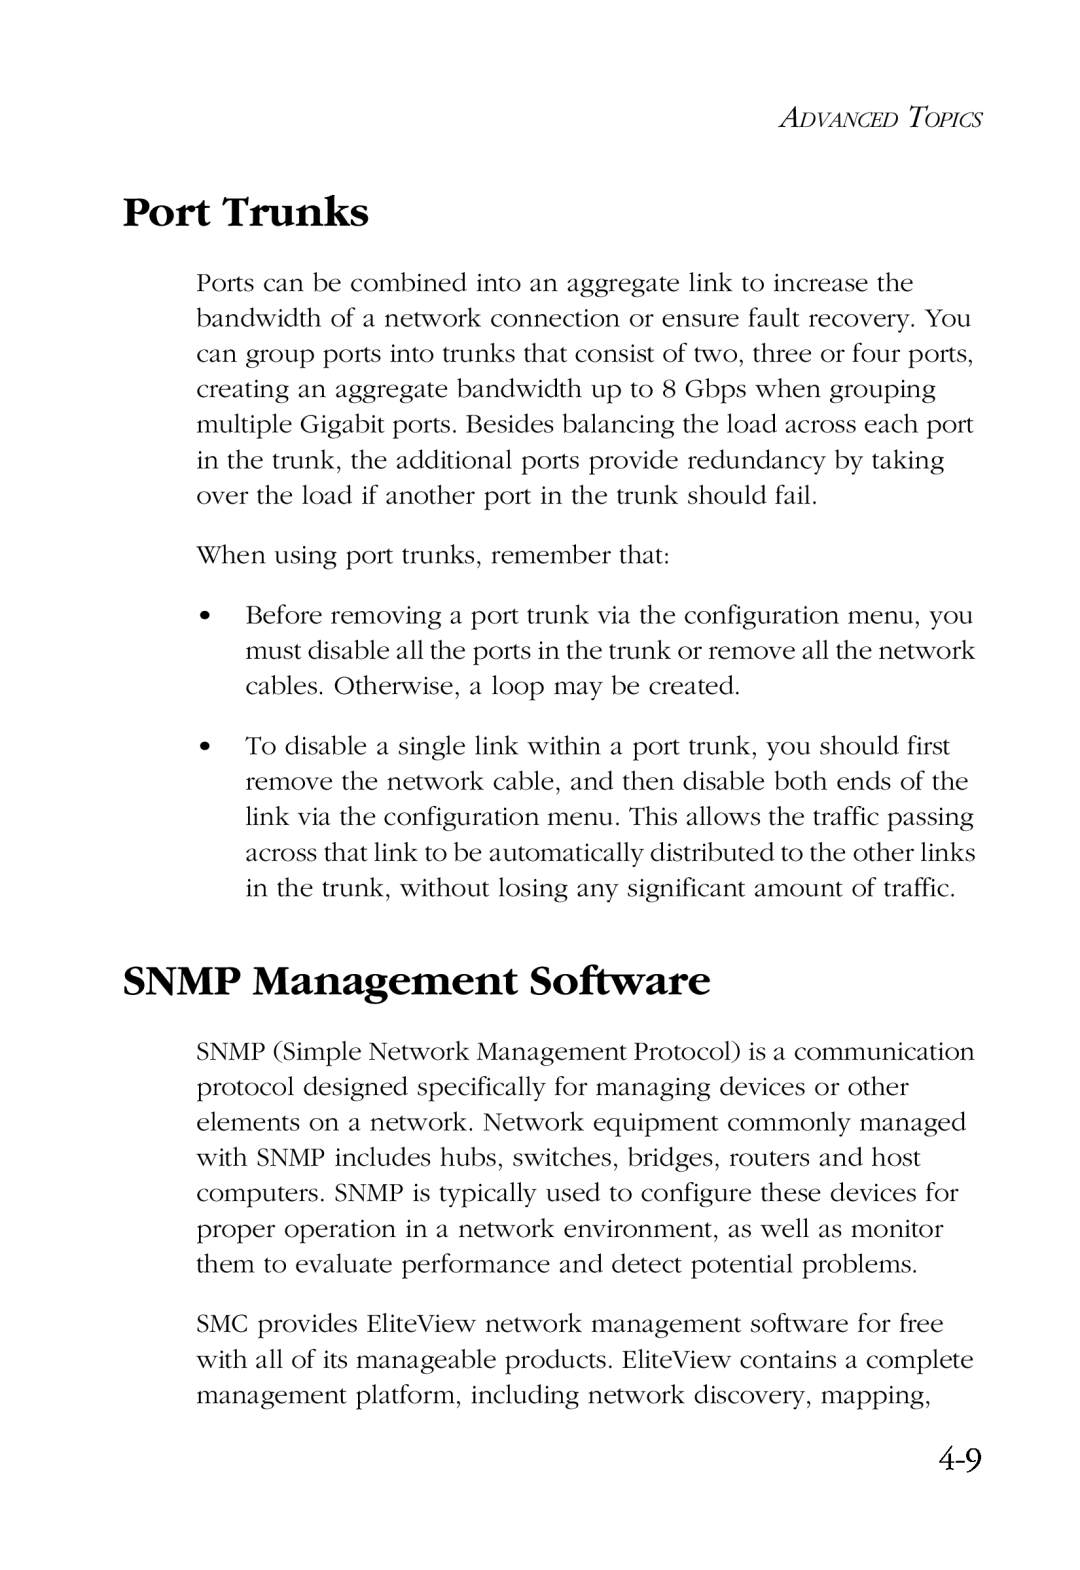 SMC Networks SMC6924VF manual Port Trunks, SNMP Management Software 